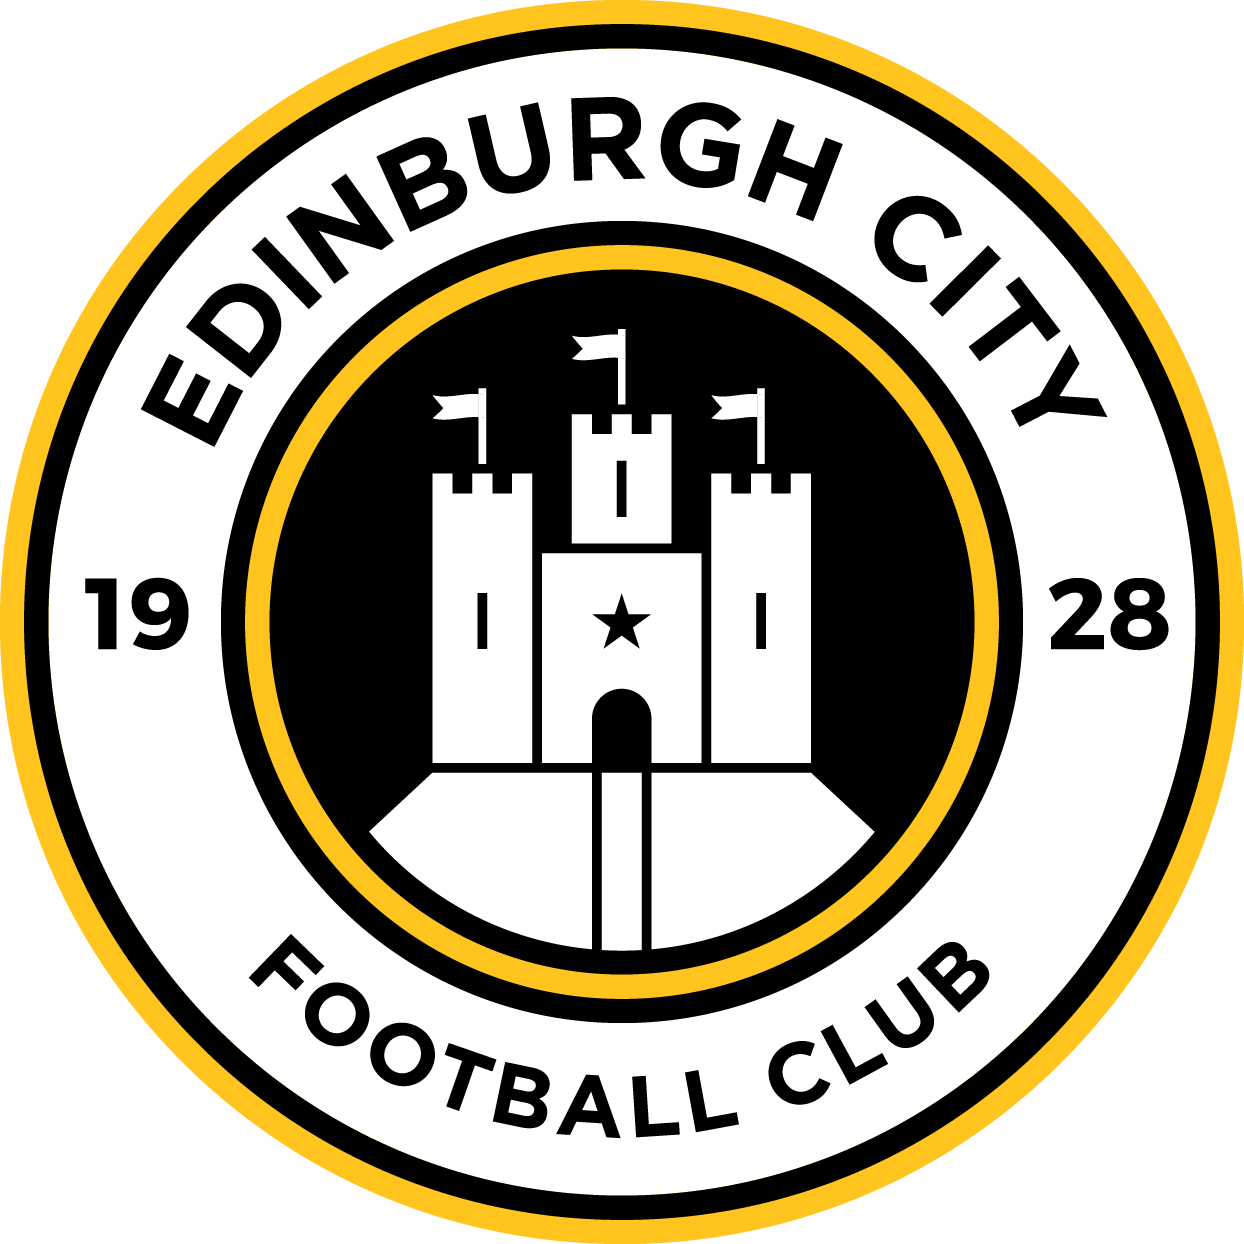 Edinburgh City FC